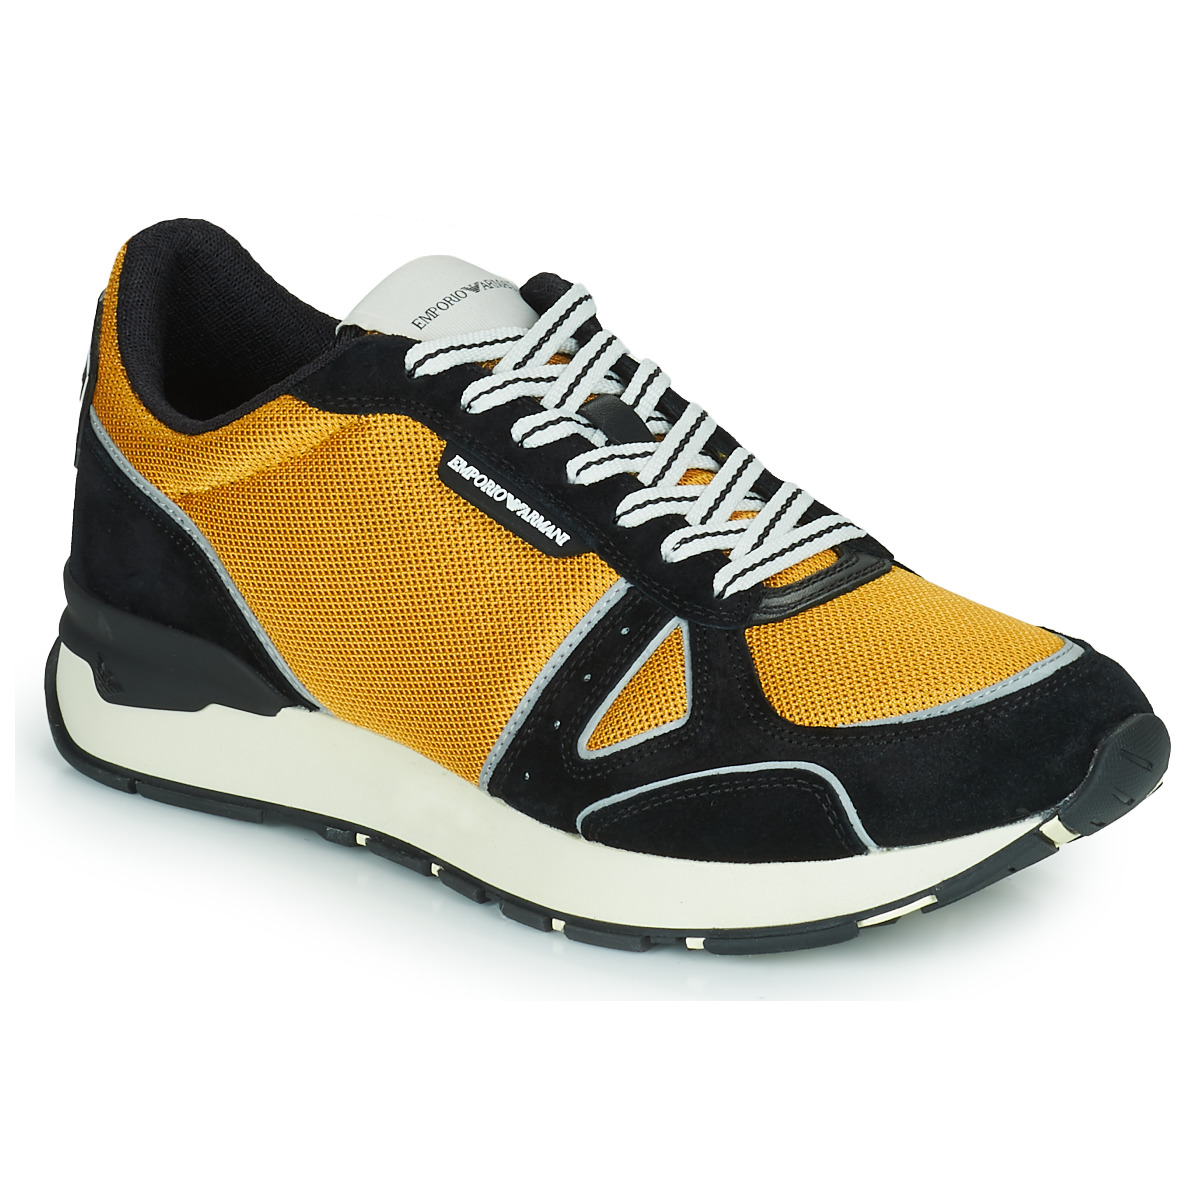 鞋子 男士 球鞋基本款 Emporio Armani TREMMA 黑色 / 黄色